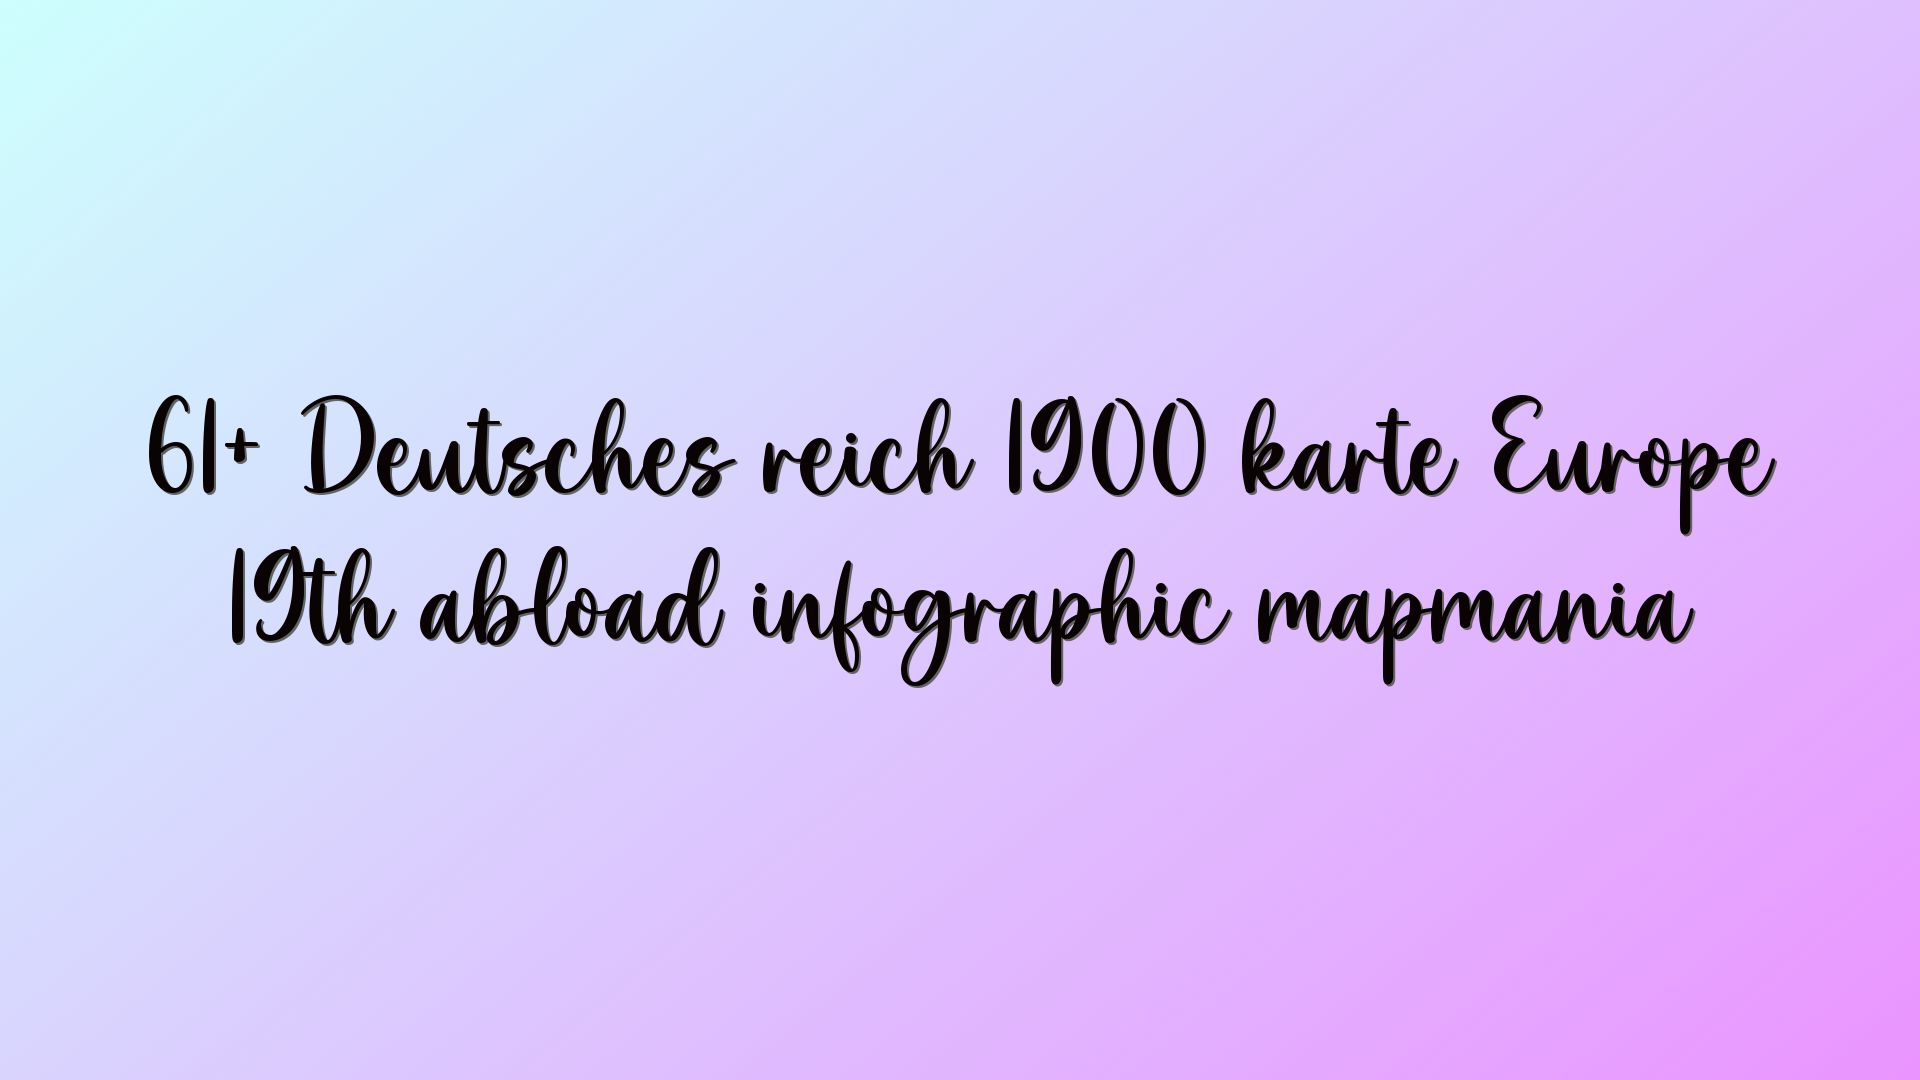 61+ Deutsches reich 1900 karte Europe 19th abload infographic mapmania